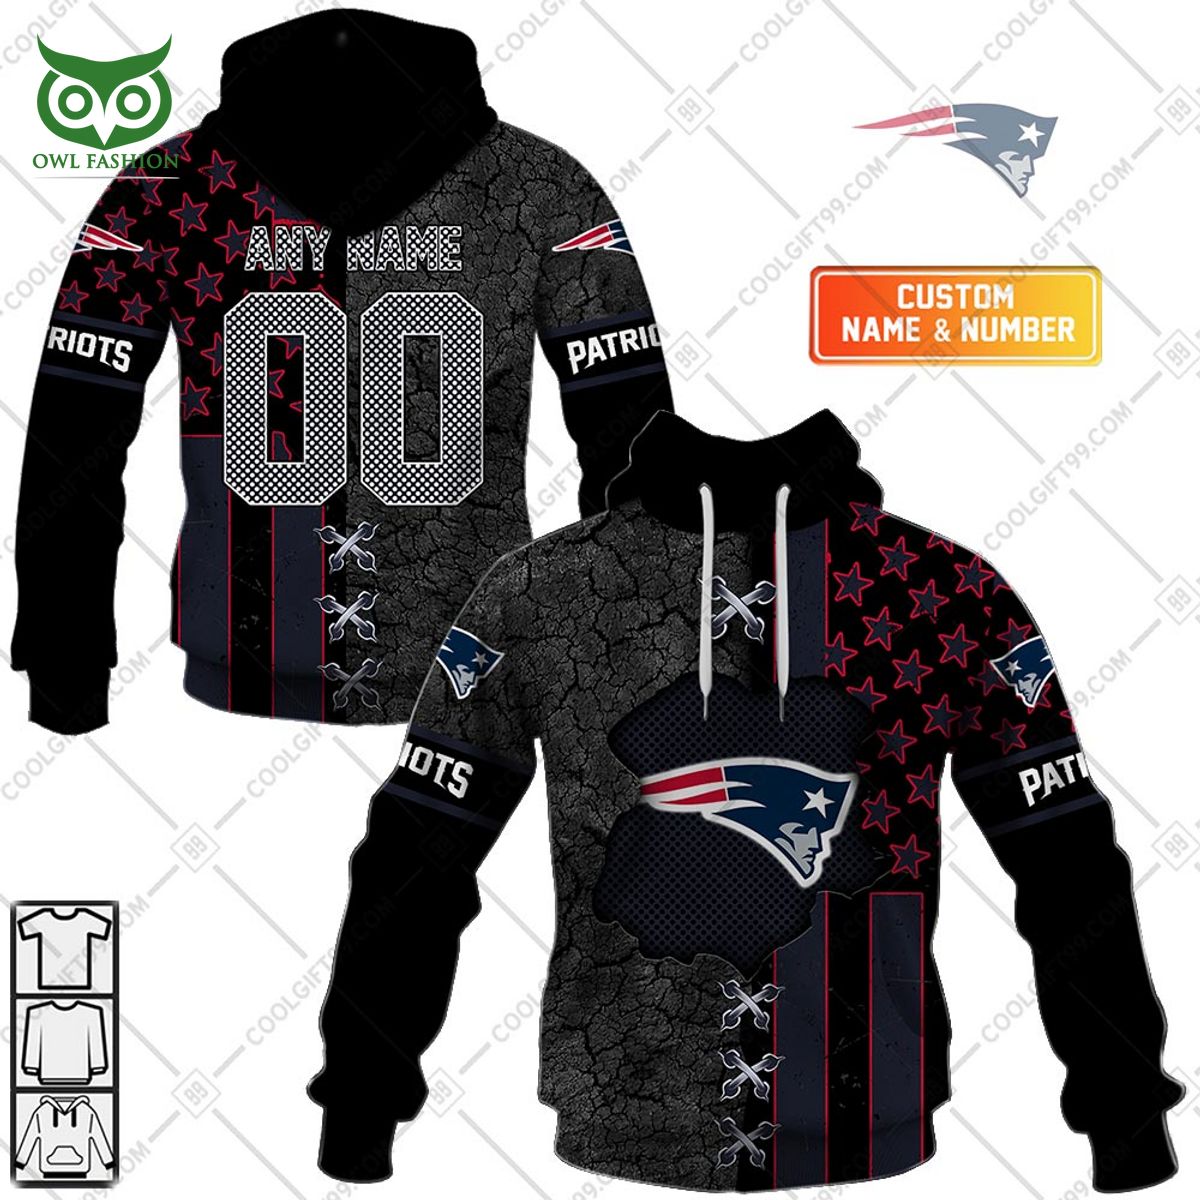 New England Patriots NFL broken wall hoodie shirt printed